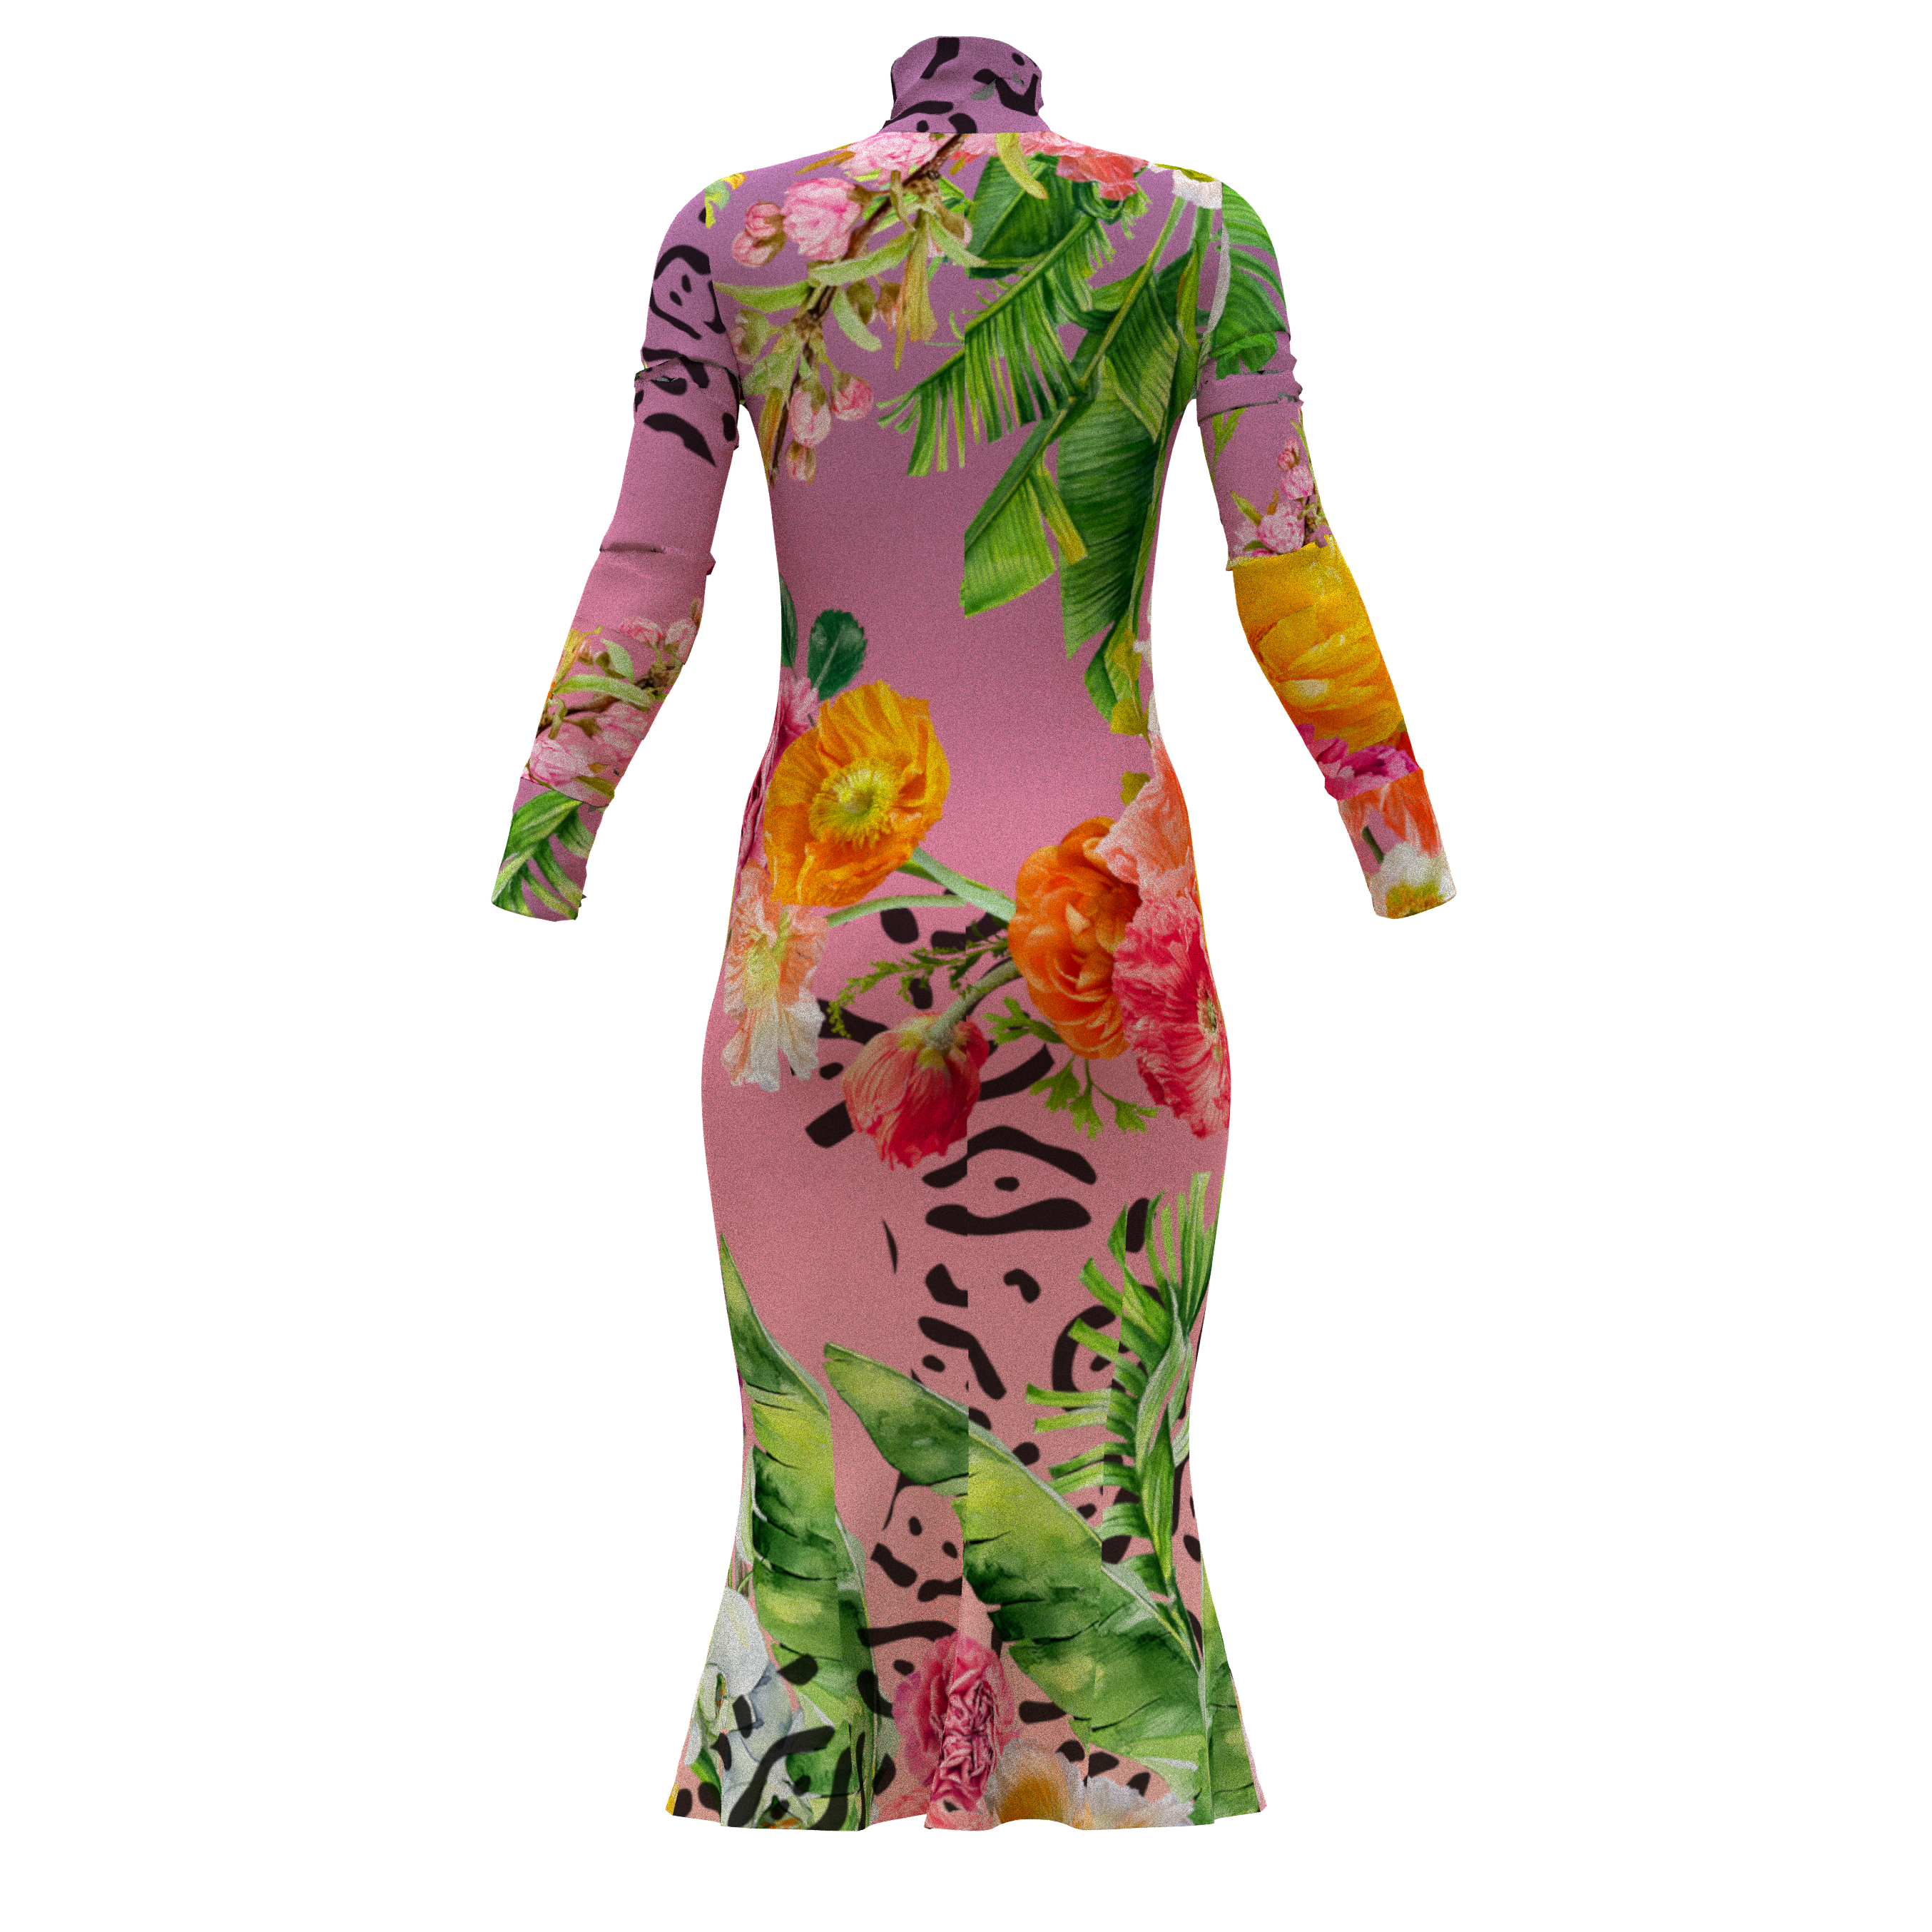 Turtleneck Whitney Dress - Spring Dream (Printed to Order)